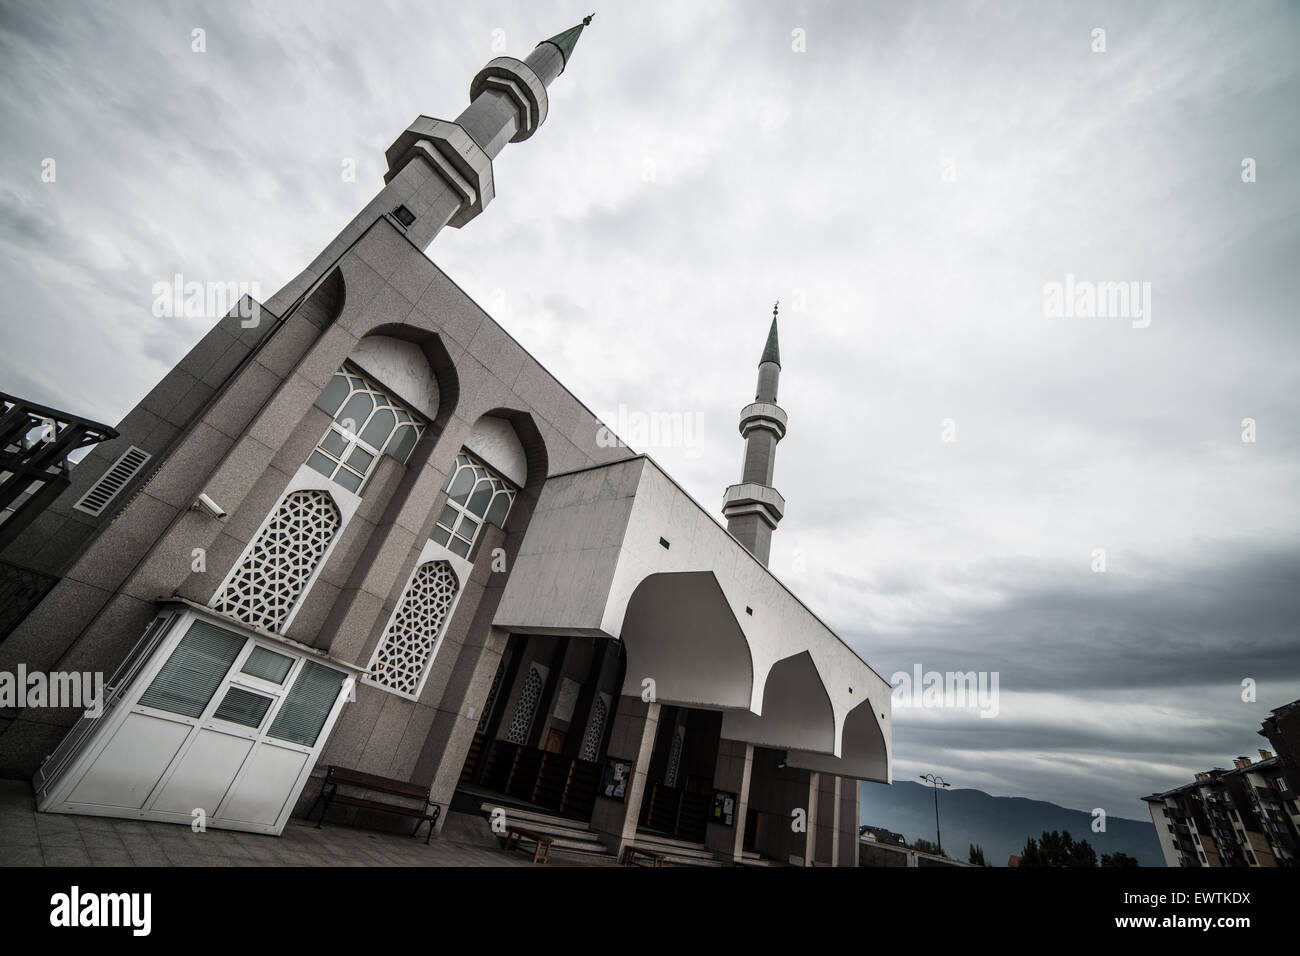 Mosque Abdullah bin Abdulaziz Al Saud Stock Photo